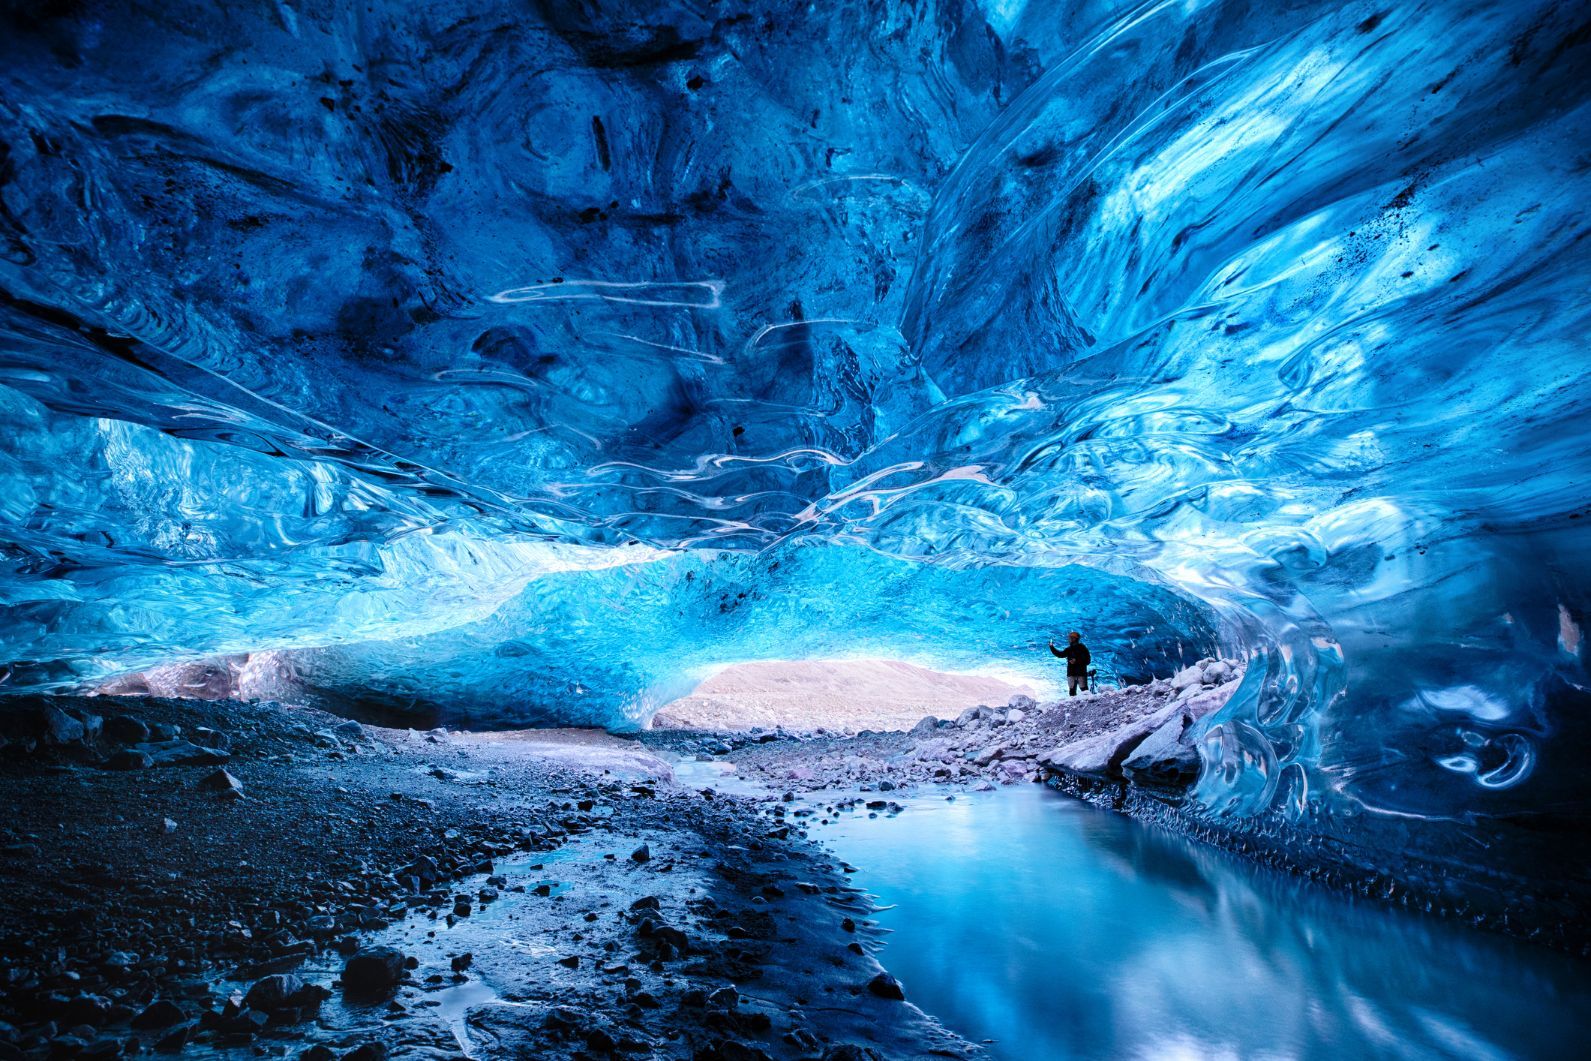 Inside an ice cave at Breioarmerkurjokull, part of the Vatnajokull glacier in southeast Iceland. 